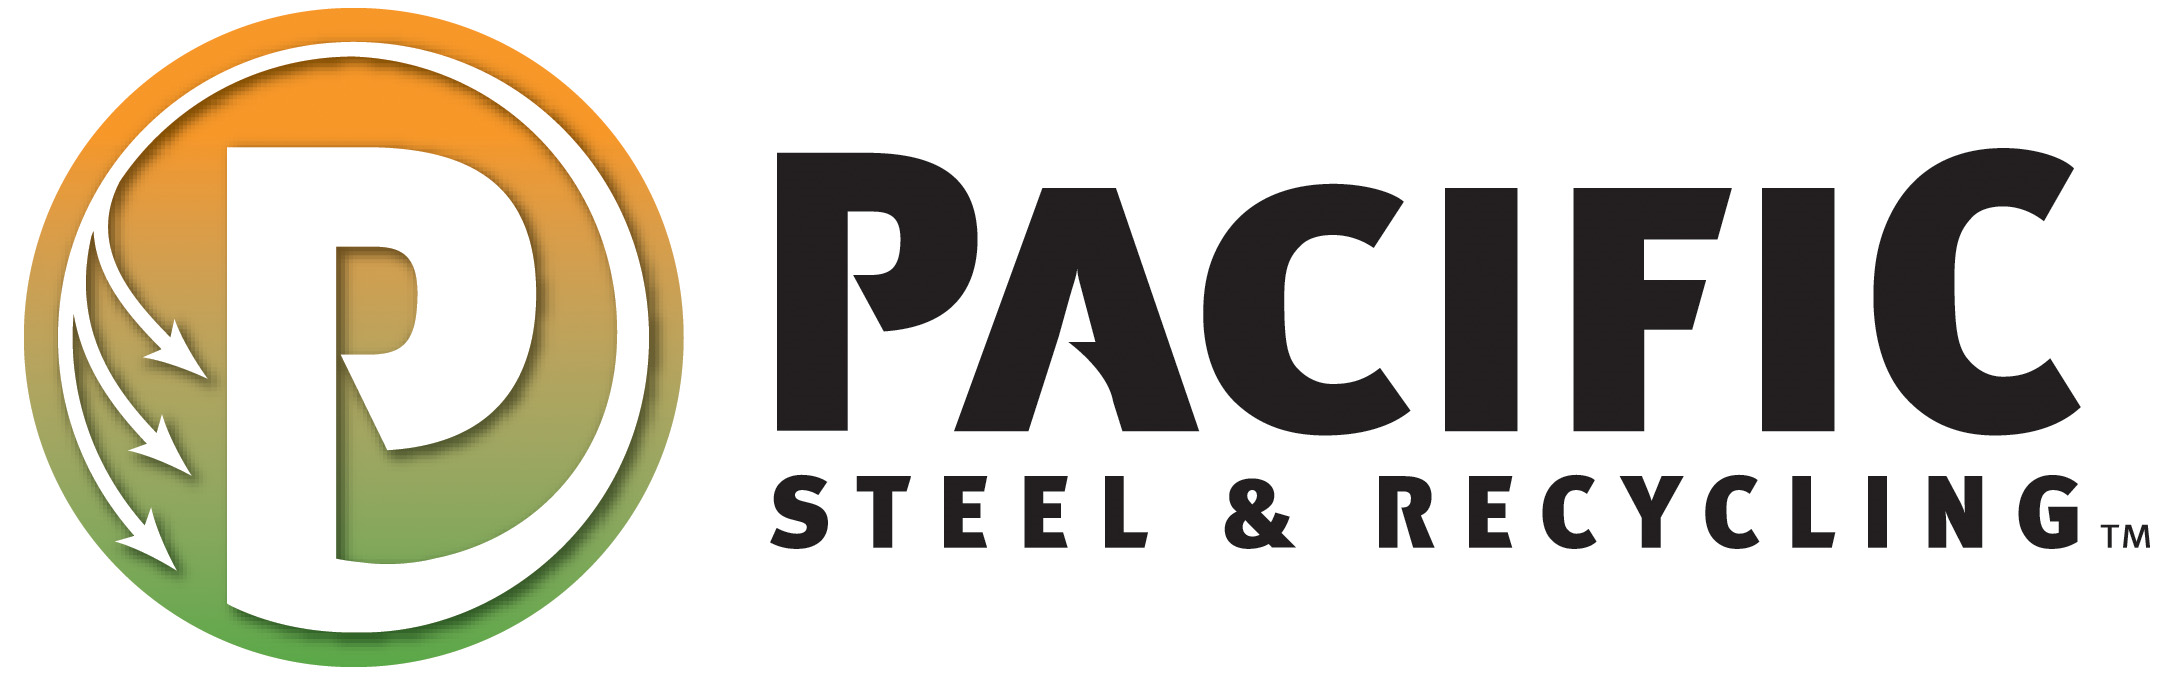 Pacific Steel